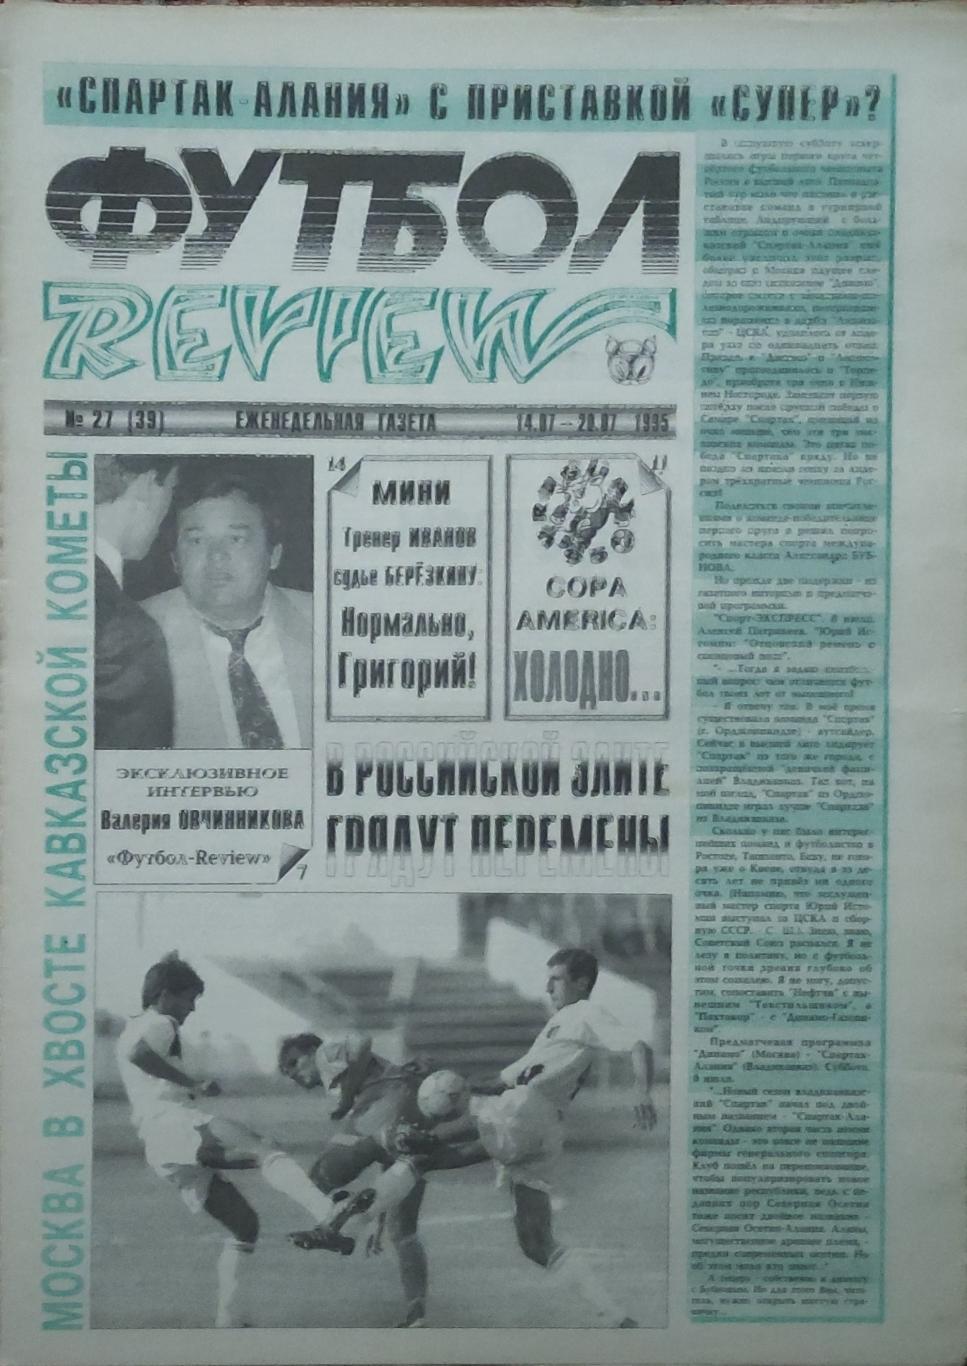 Футбол Review.Еженедельная газета.N27.14-20.07.1995.